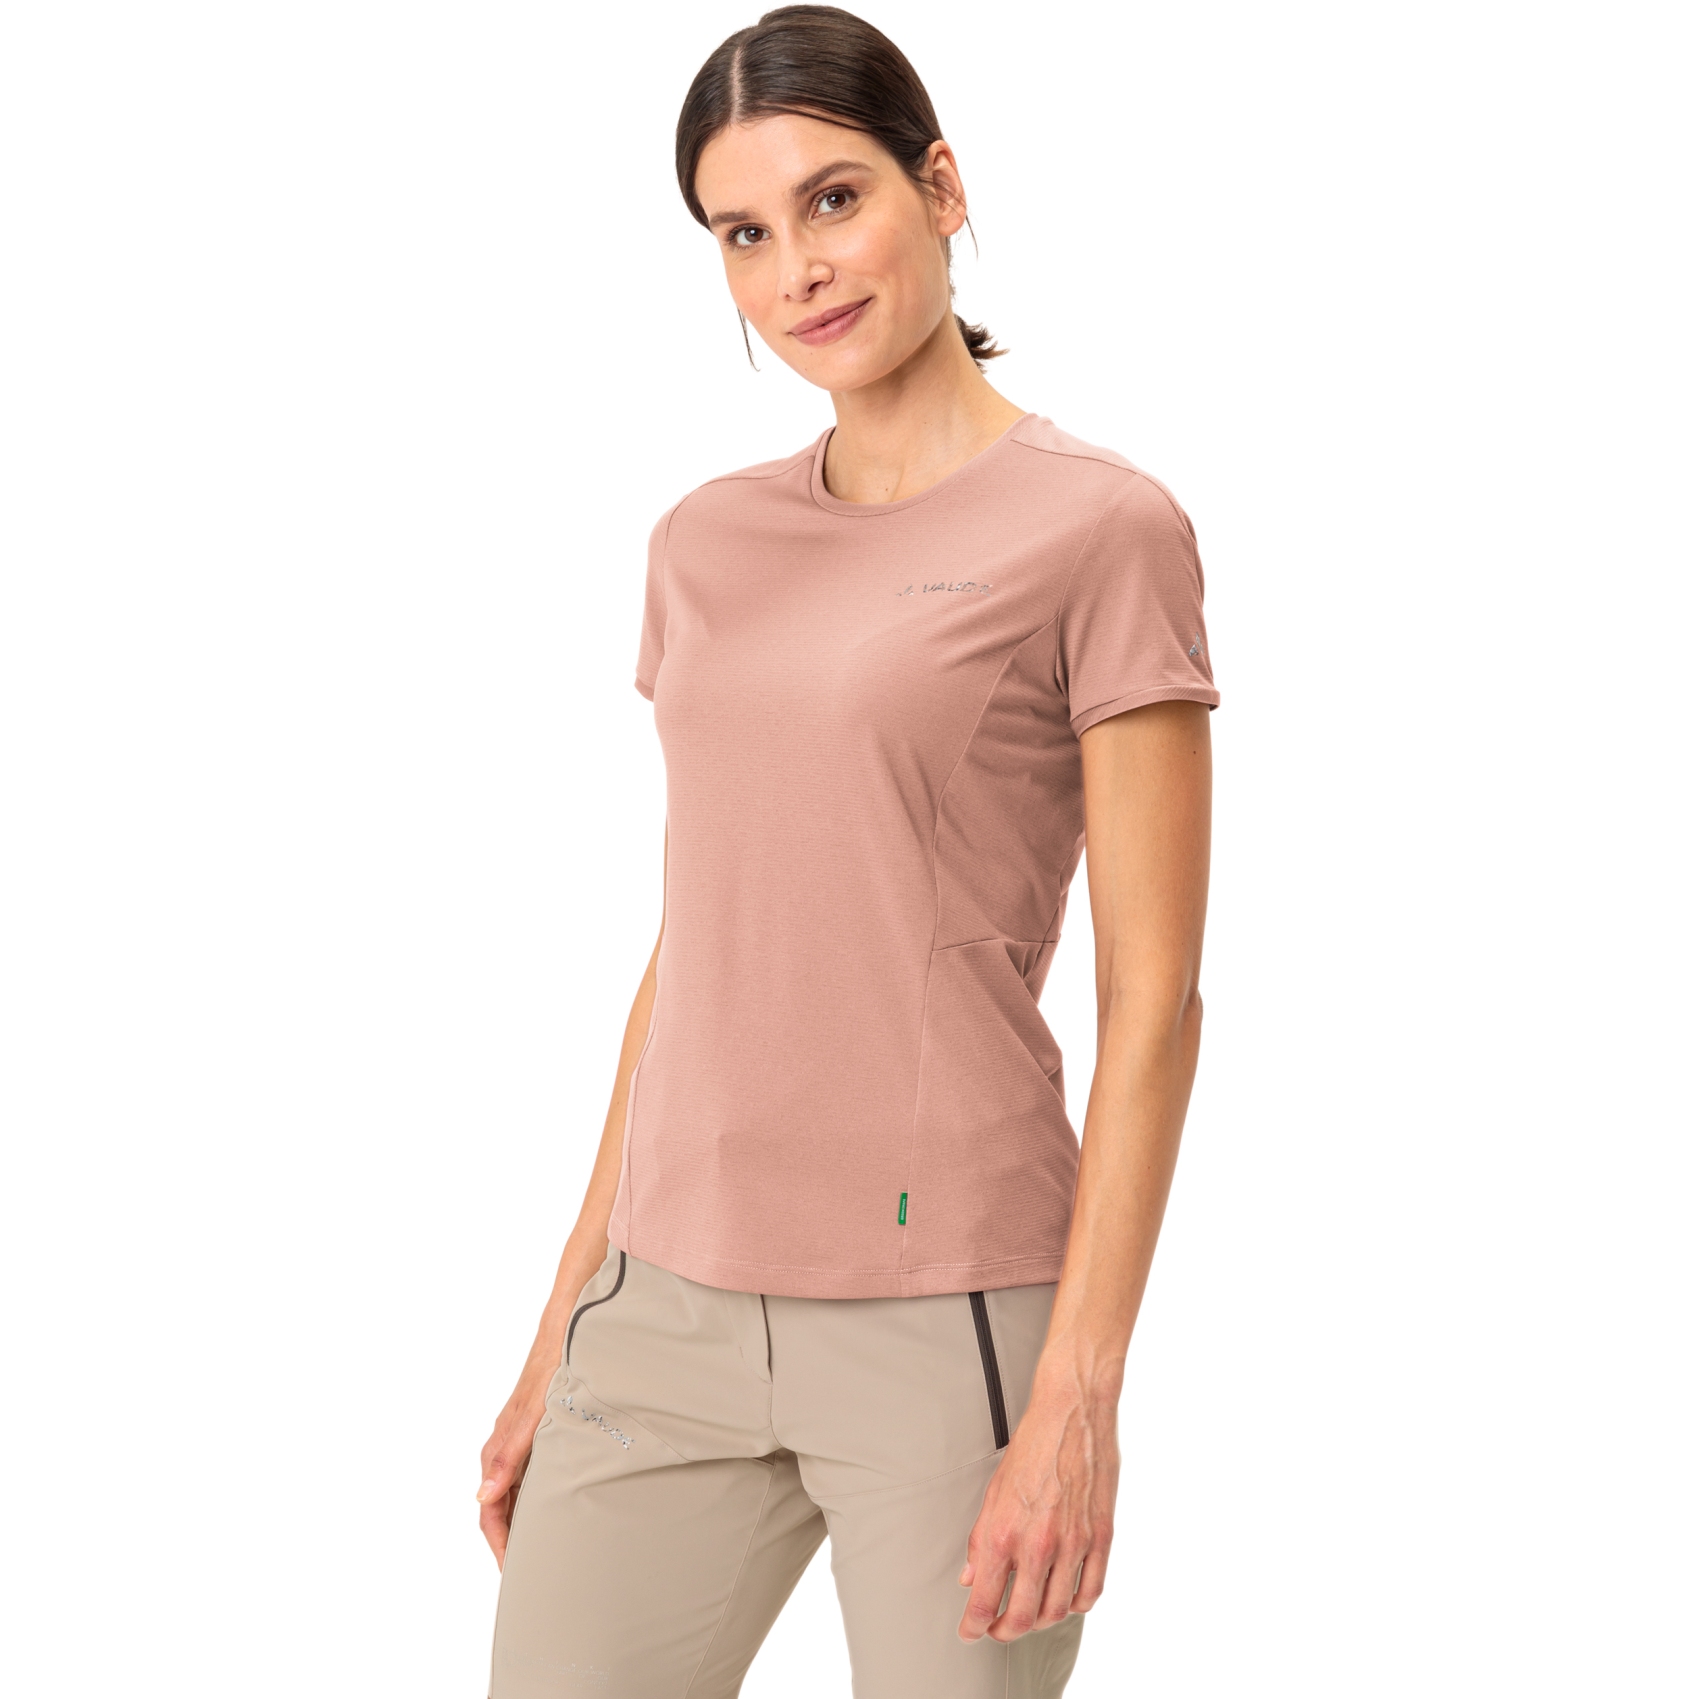 Productfoto van Vaude Elope T-Shirt Dames - soft rose